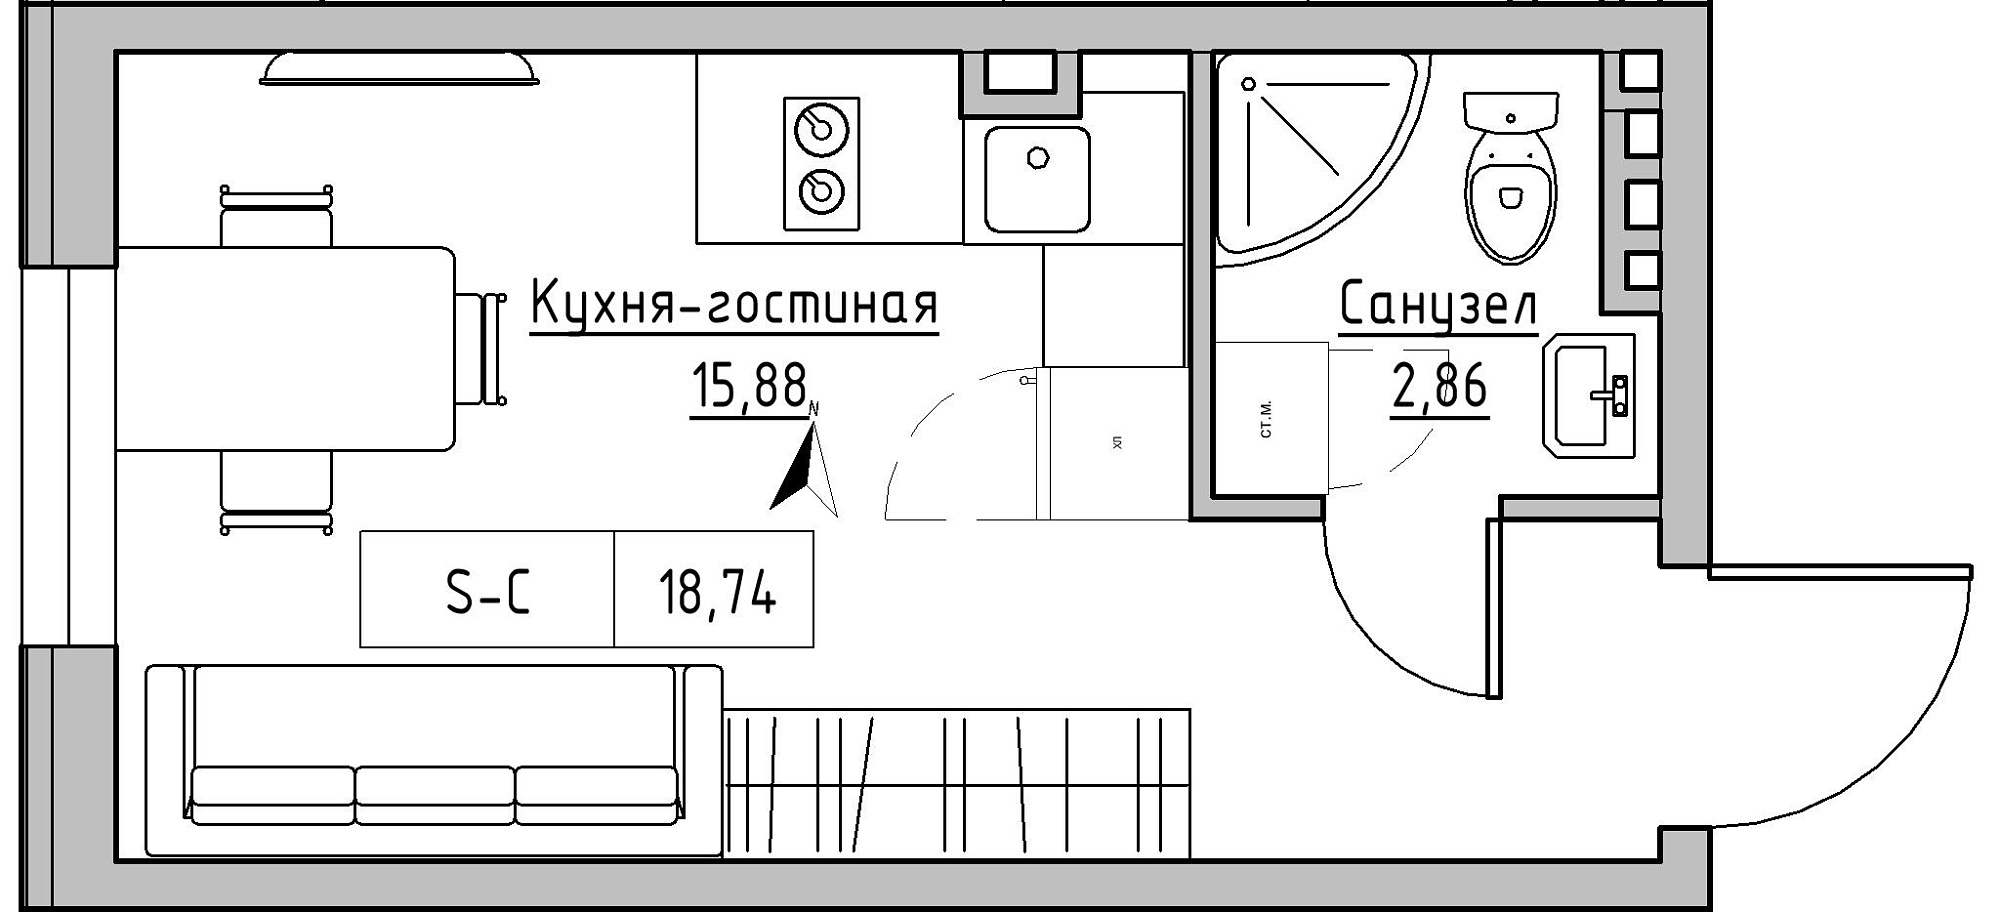 Planning Smart flats area 18.74m2, KS-024-01/0011.